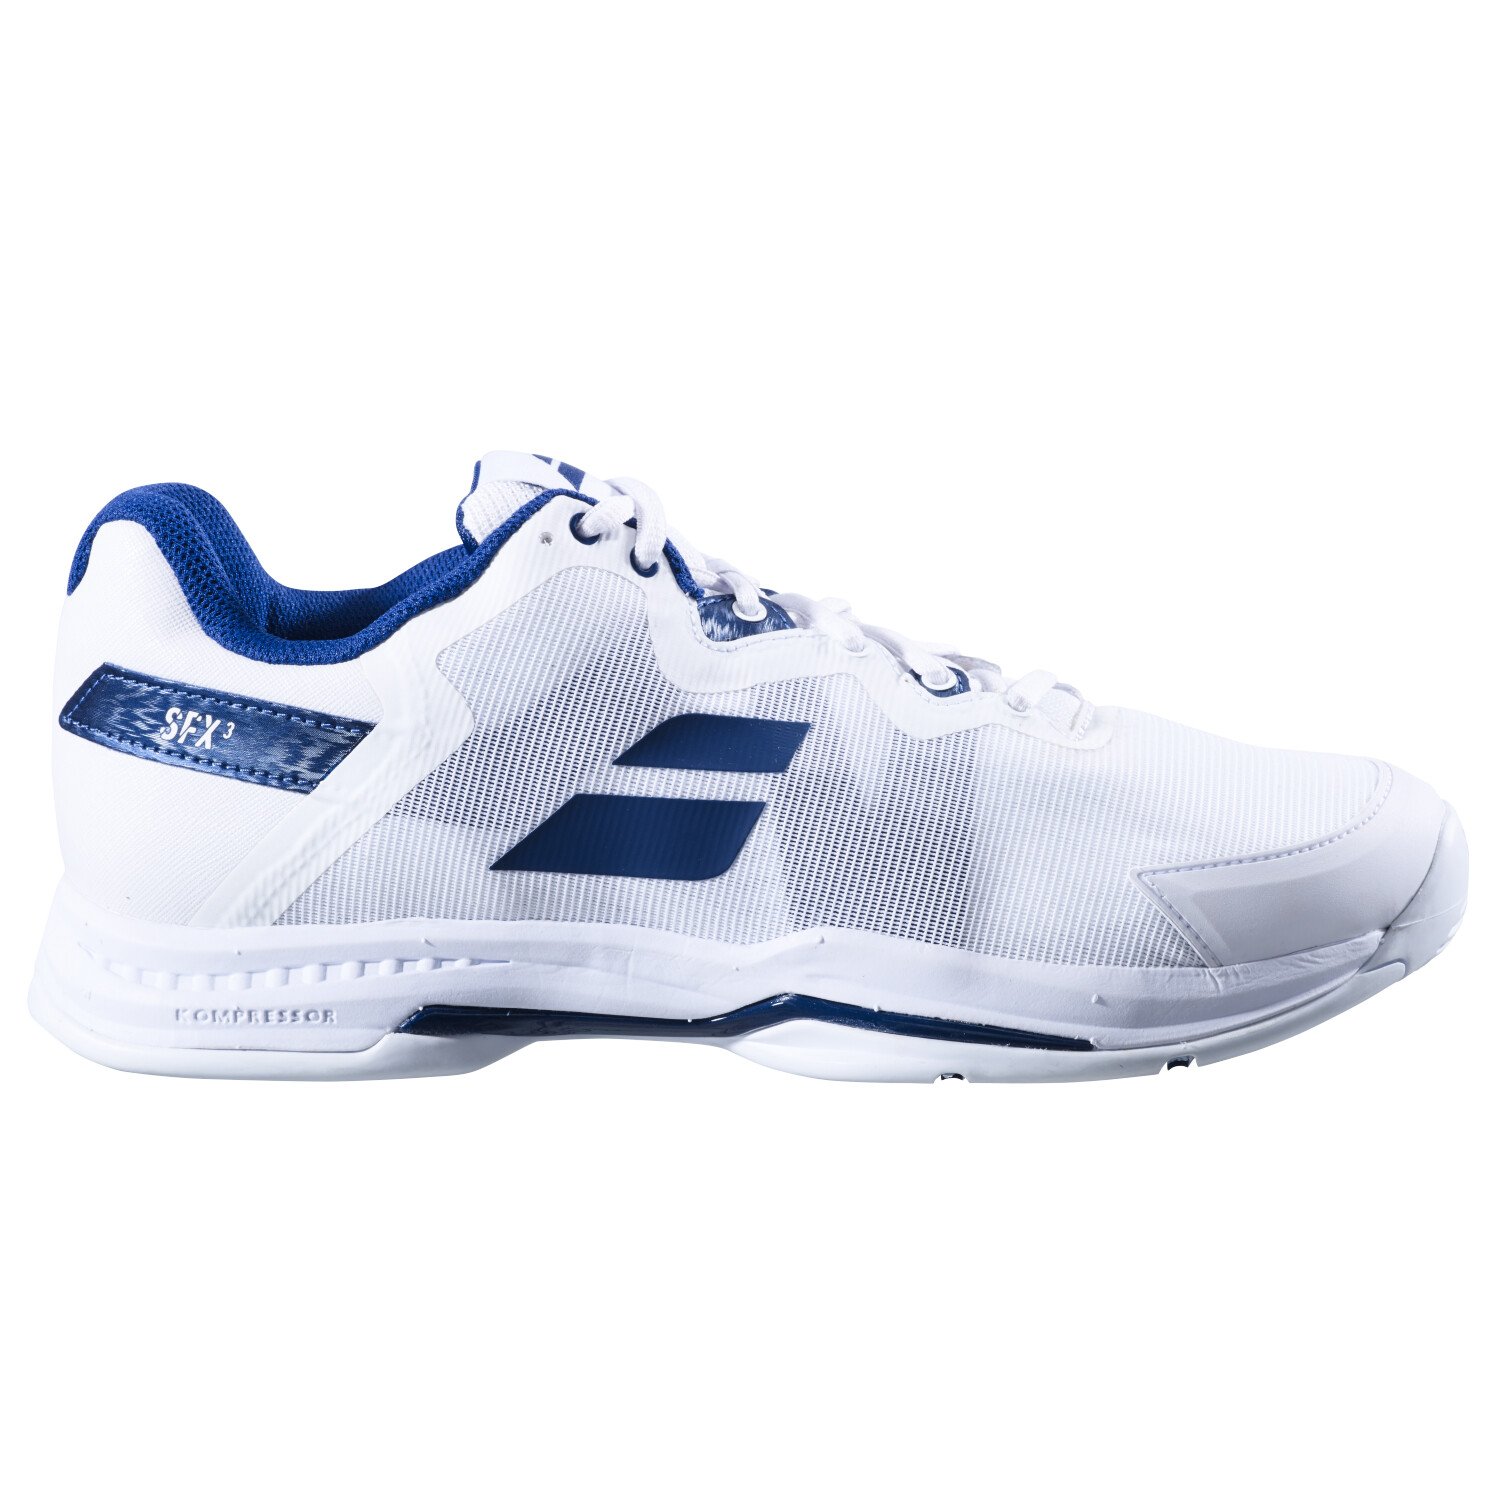 Babolat SFX 3 Men's All Court Tennis Shoes Men White/Navy EUR 42.5